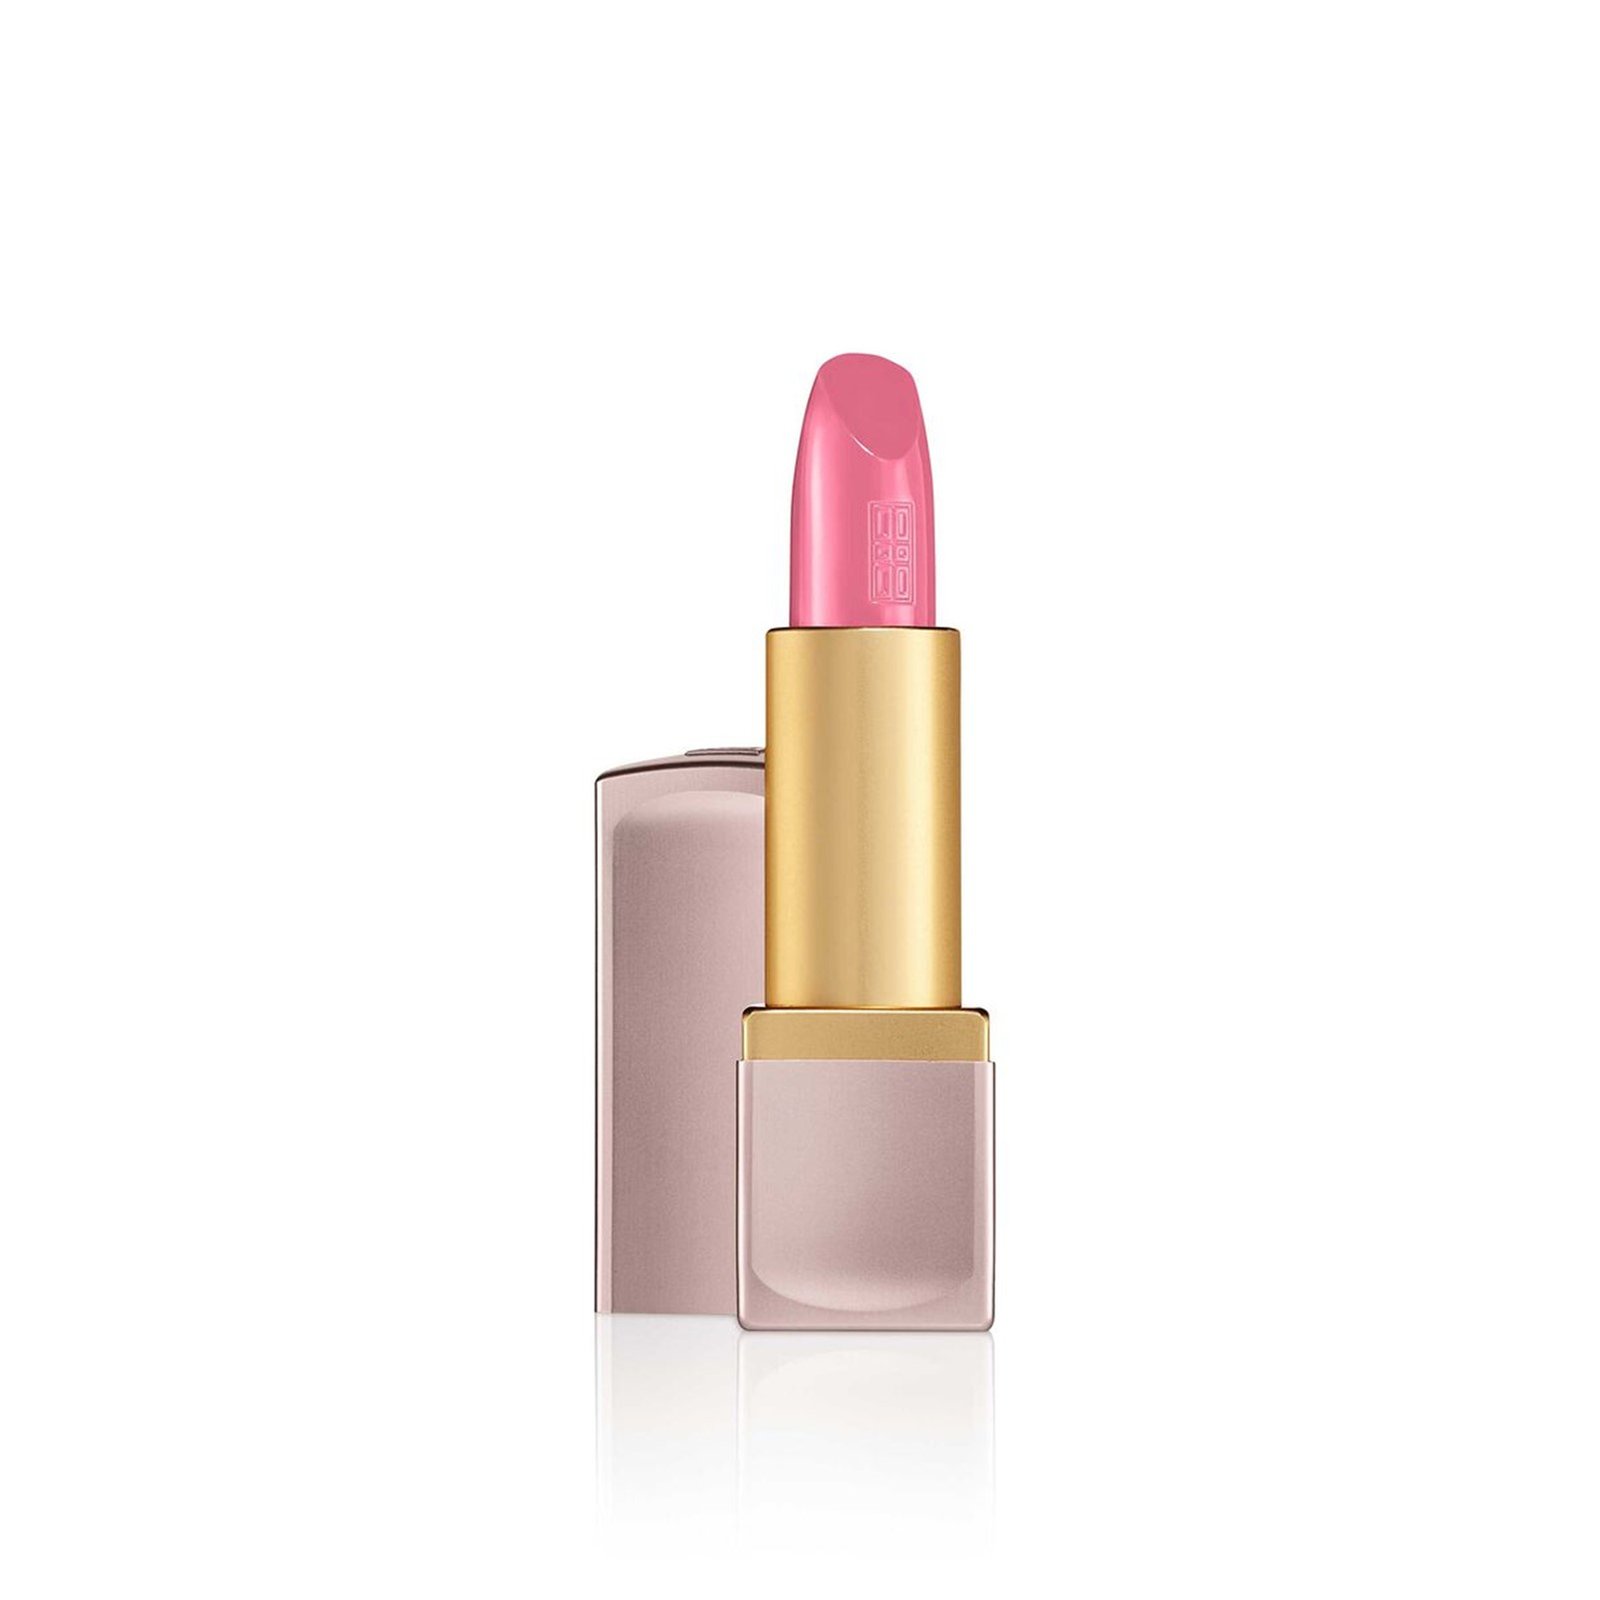 Elizabeth Arden Lip Color Lipstick 01 Petal Pink 4g (0.14 oz)